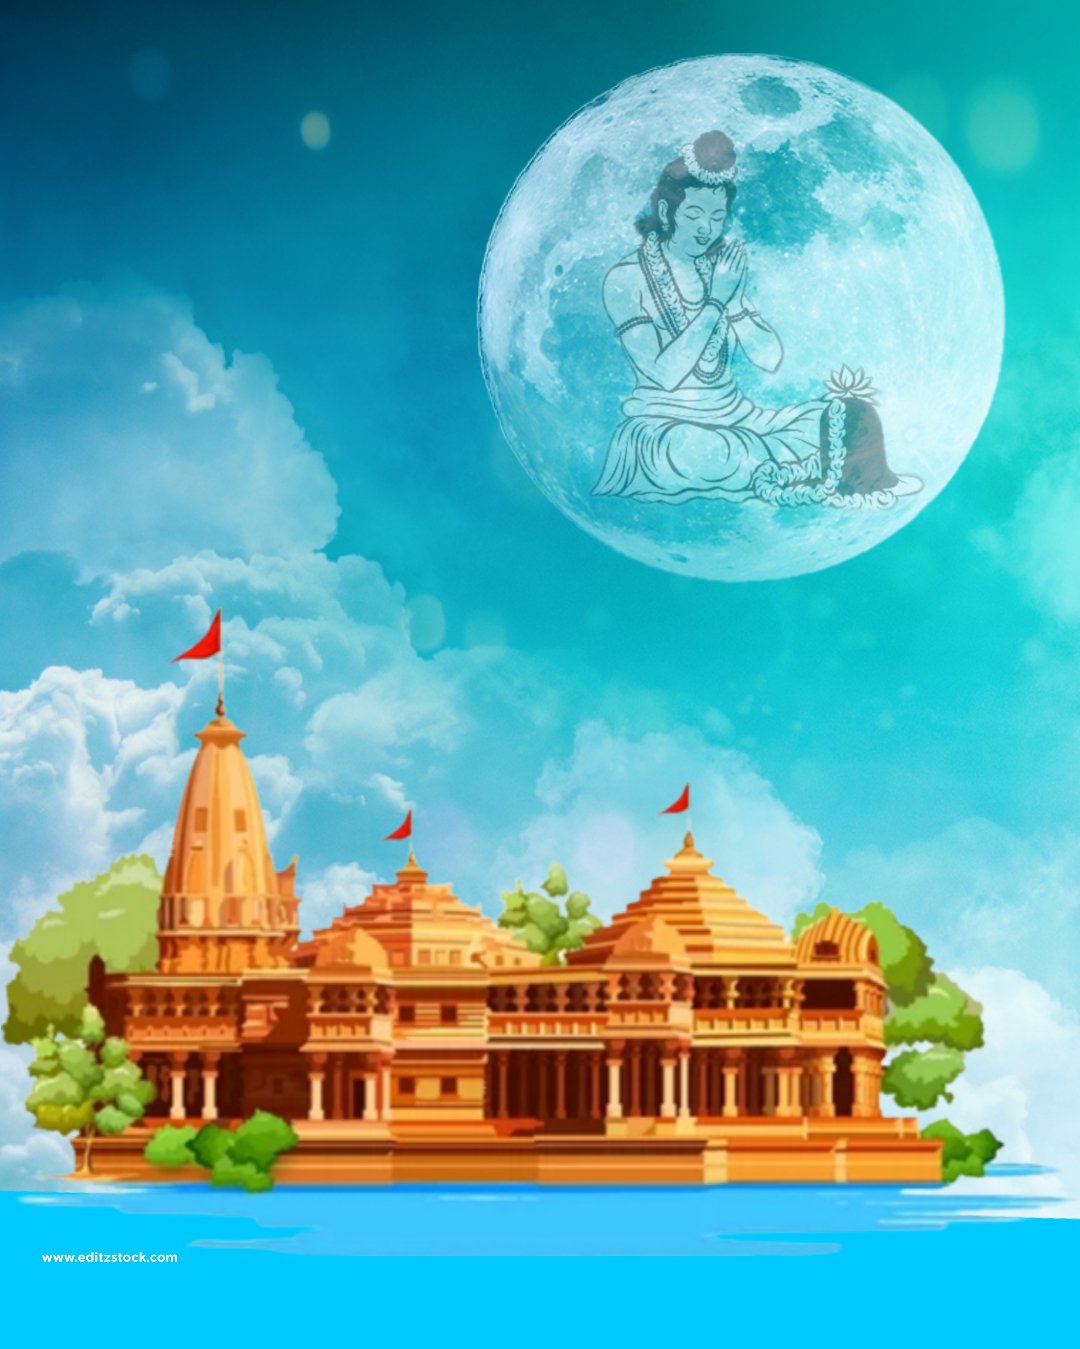 Ramnavmi hd editing background | Ram navami editing background picsart